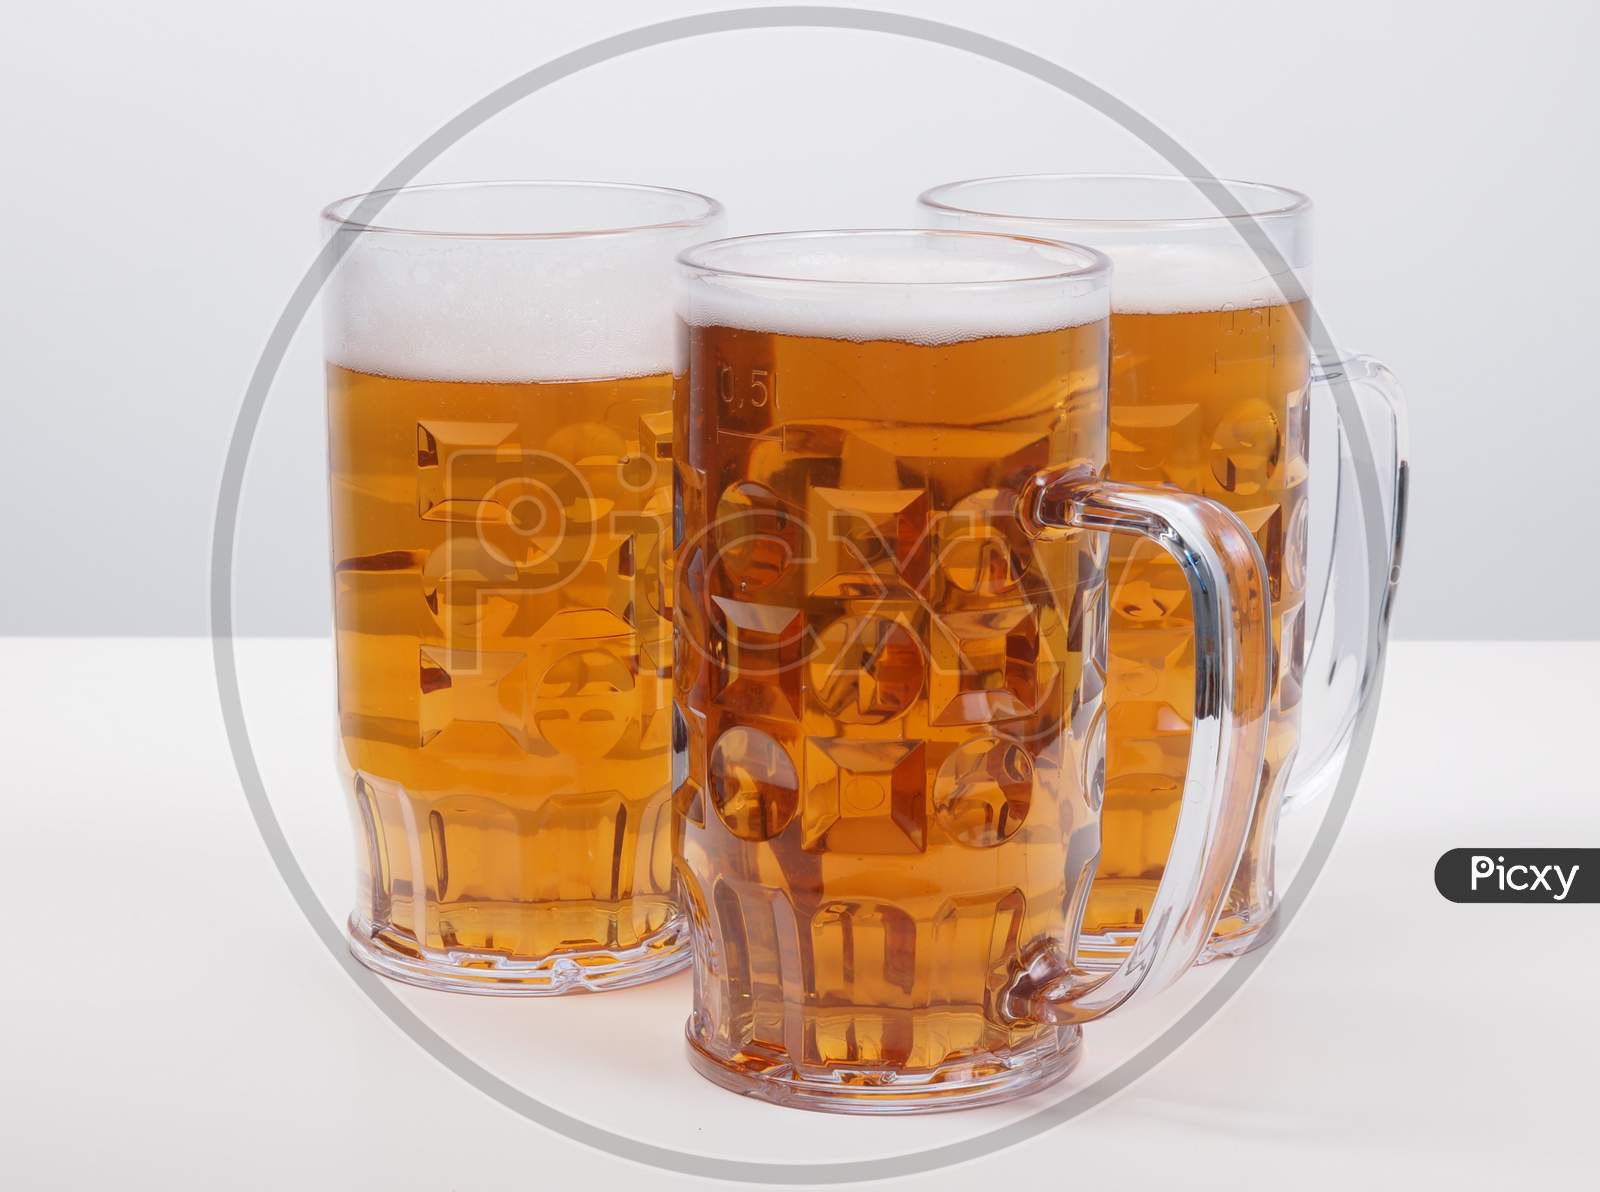 Lager Beer Glasses